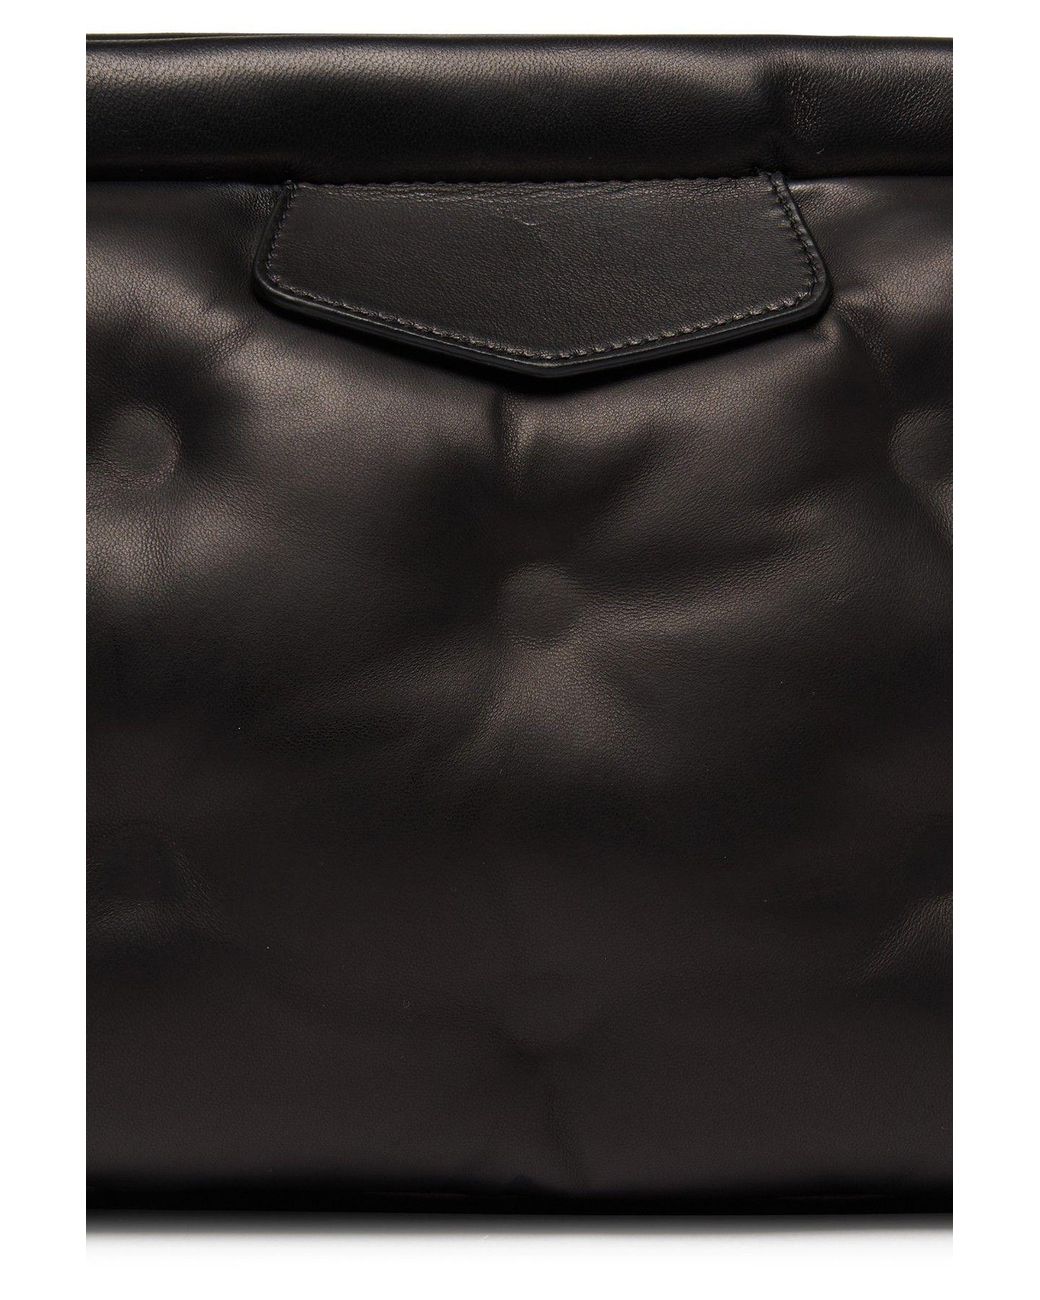 Maison Margiela Glam Slam Classique Small Bag in Black | Lyst